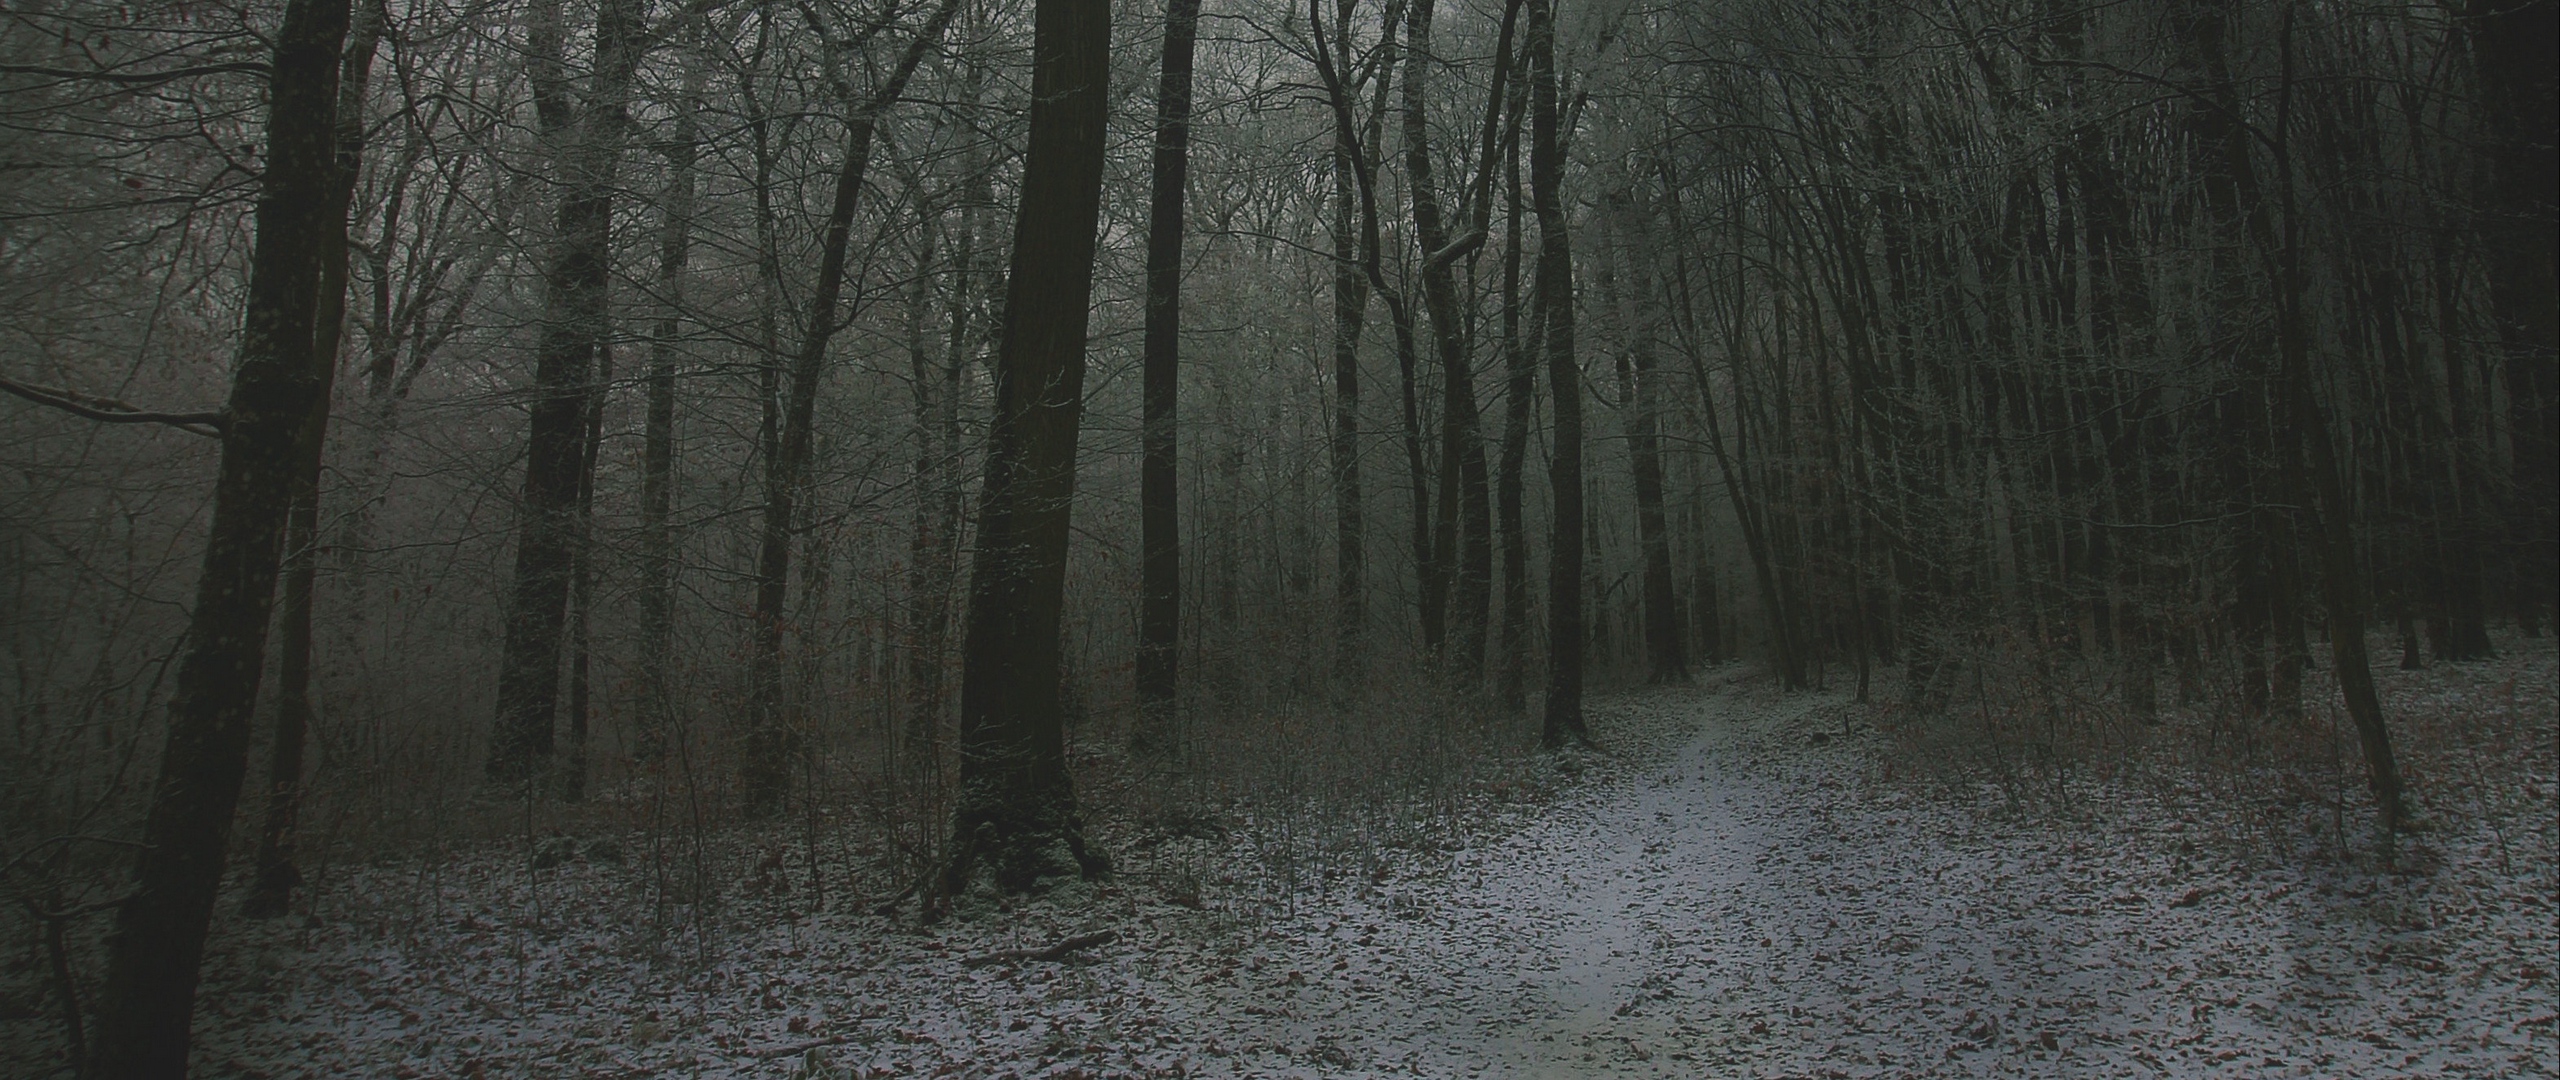 Download wallpaper 2560x1080 fog, forest, path, snow, autumn